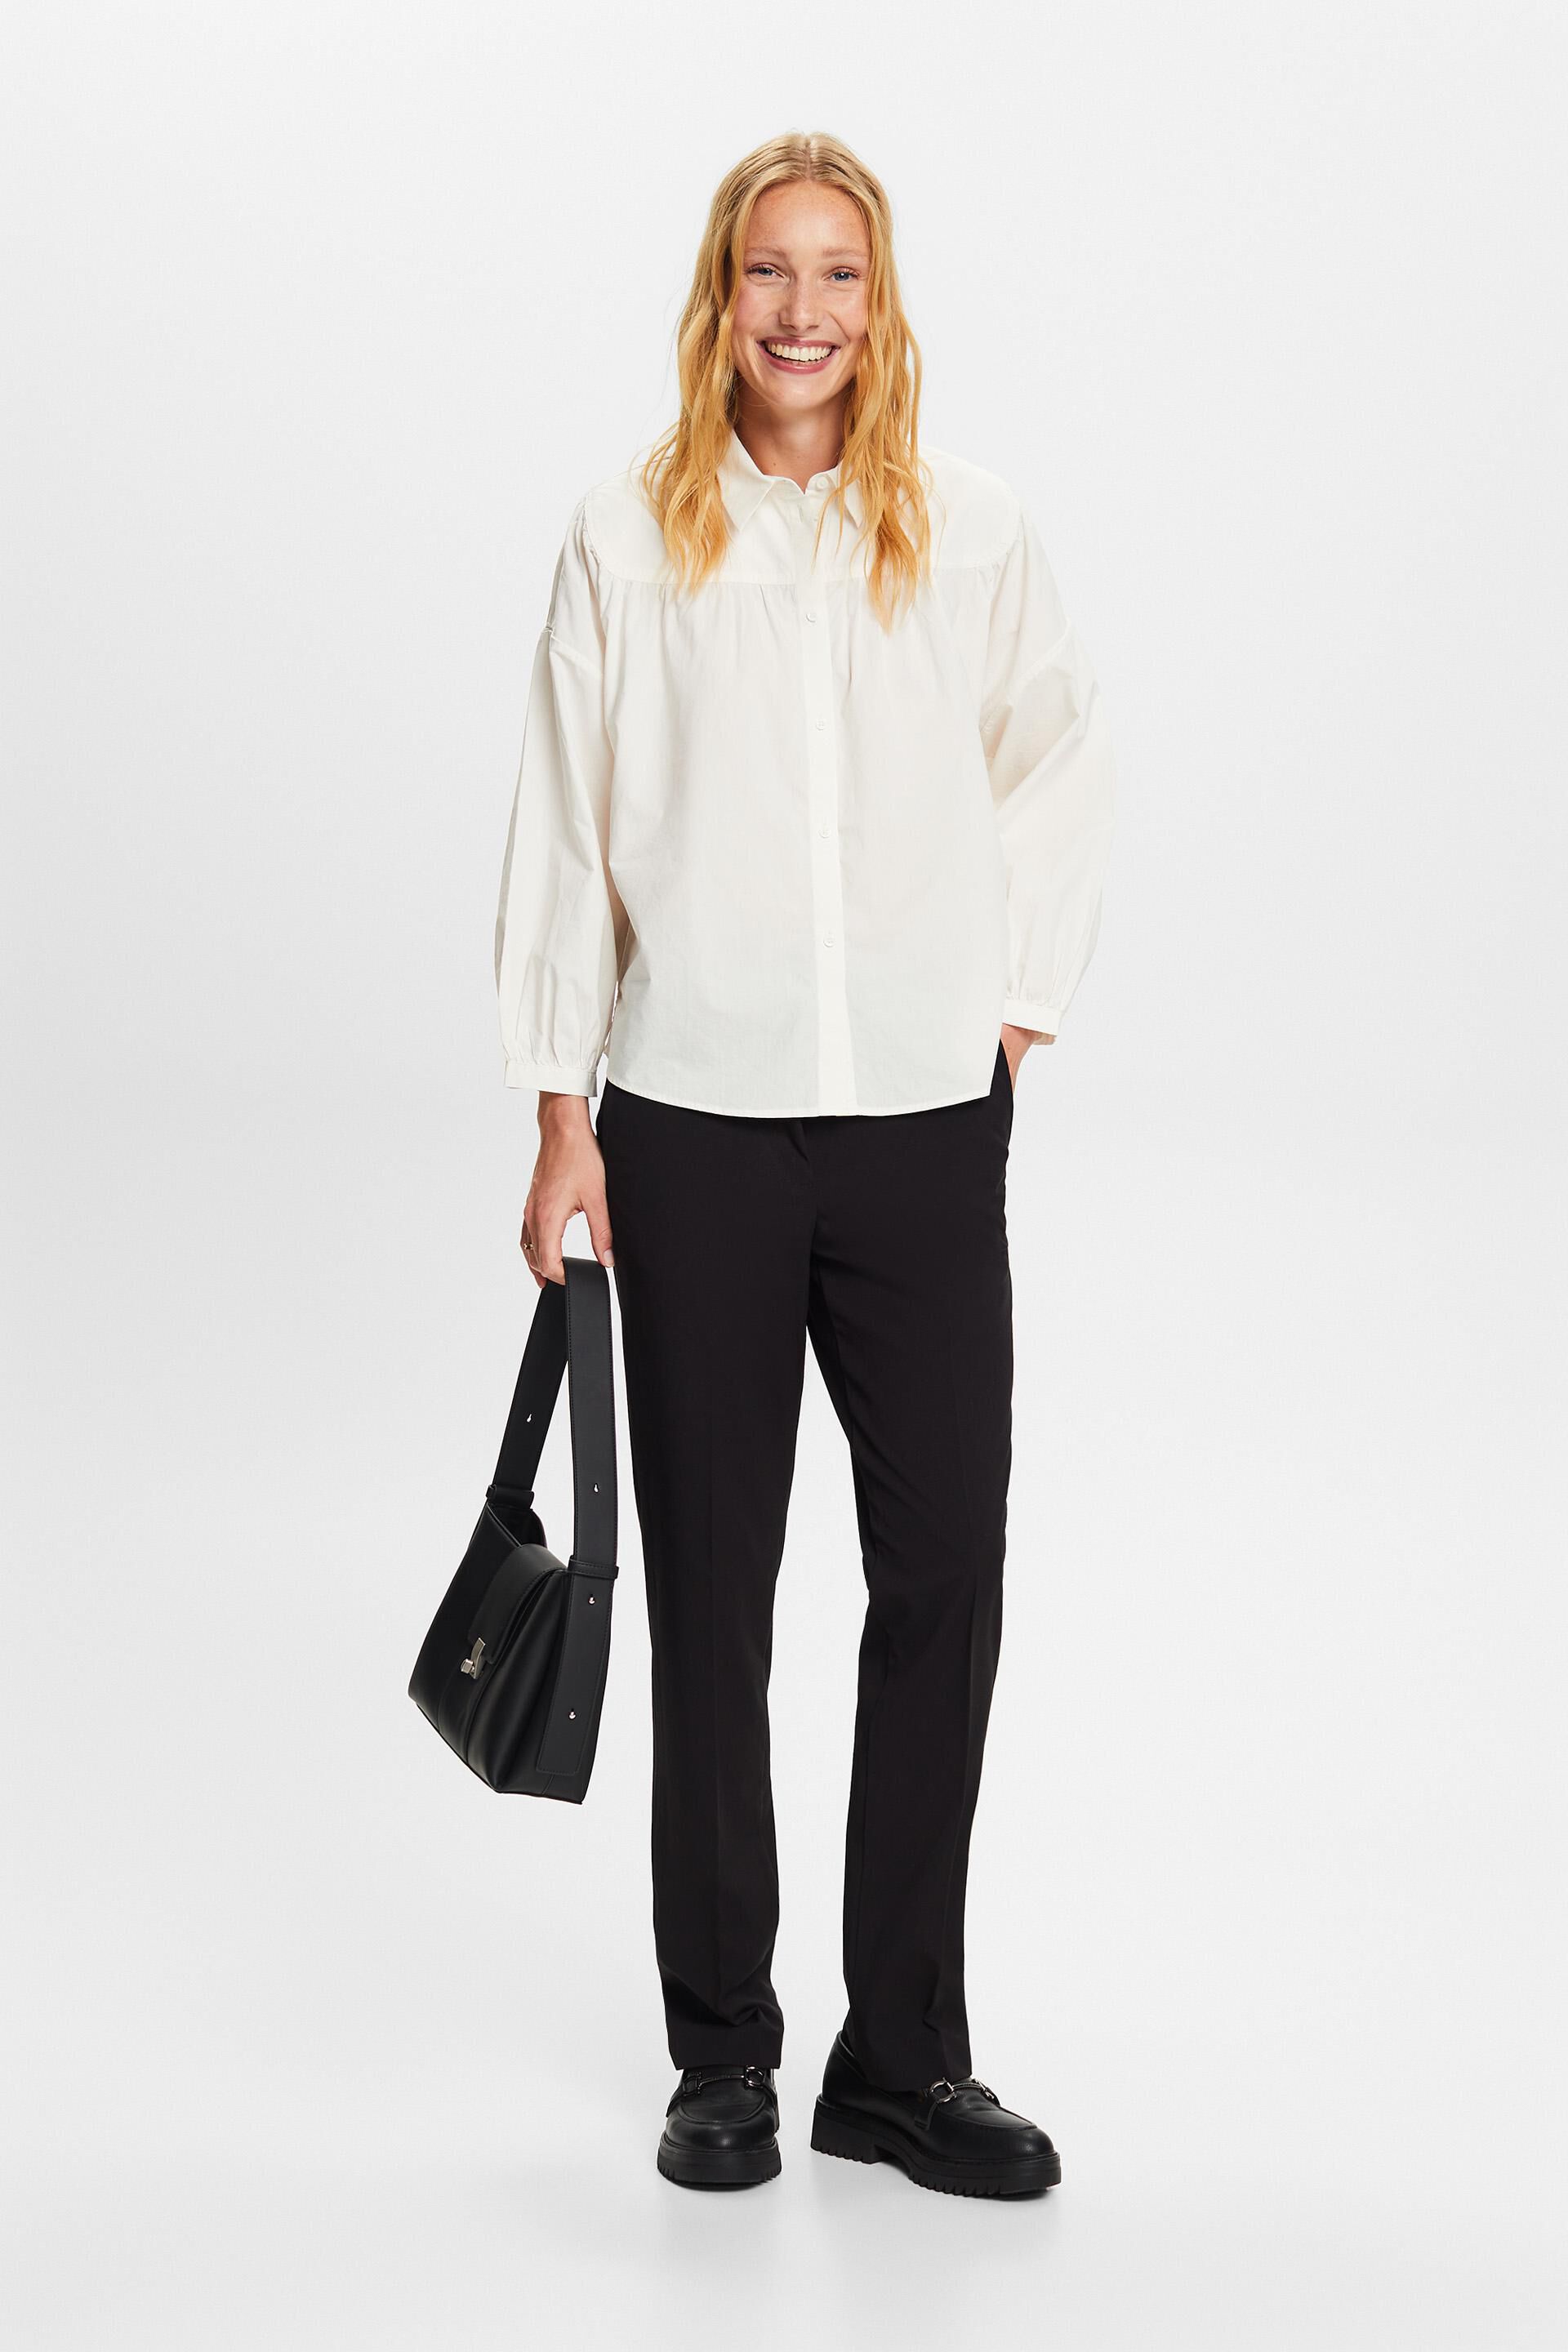 Esprit Damen Poplin blouse, 100% cotton